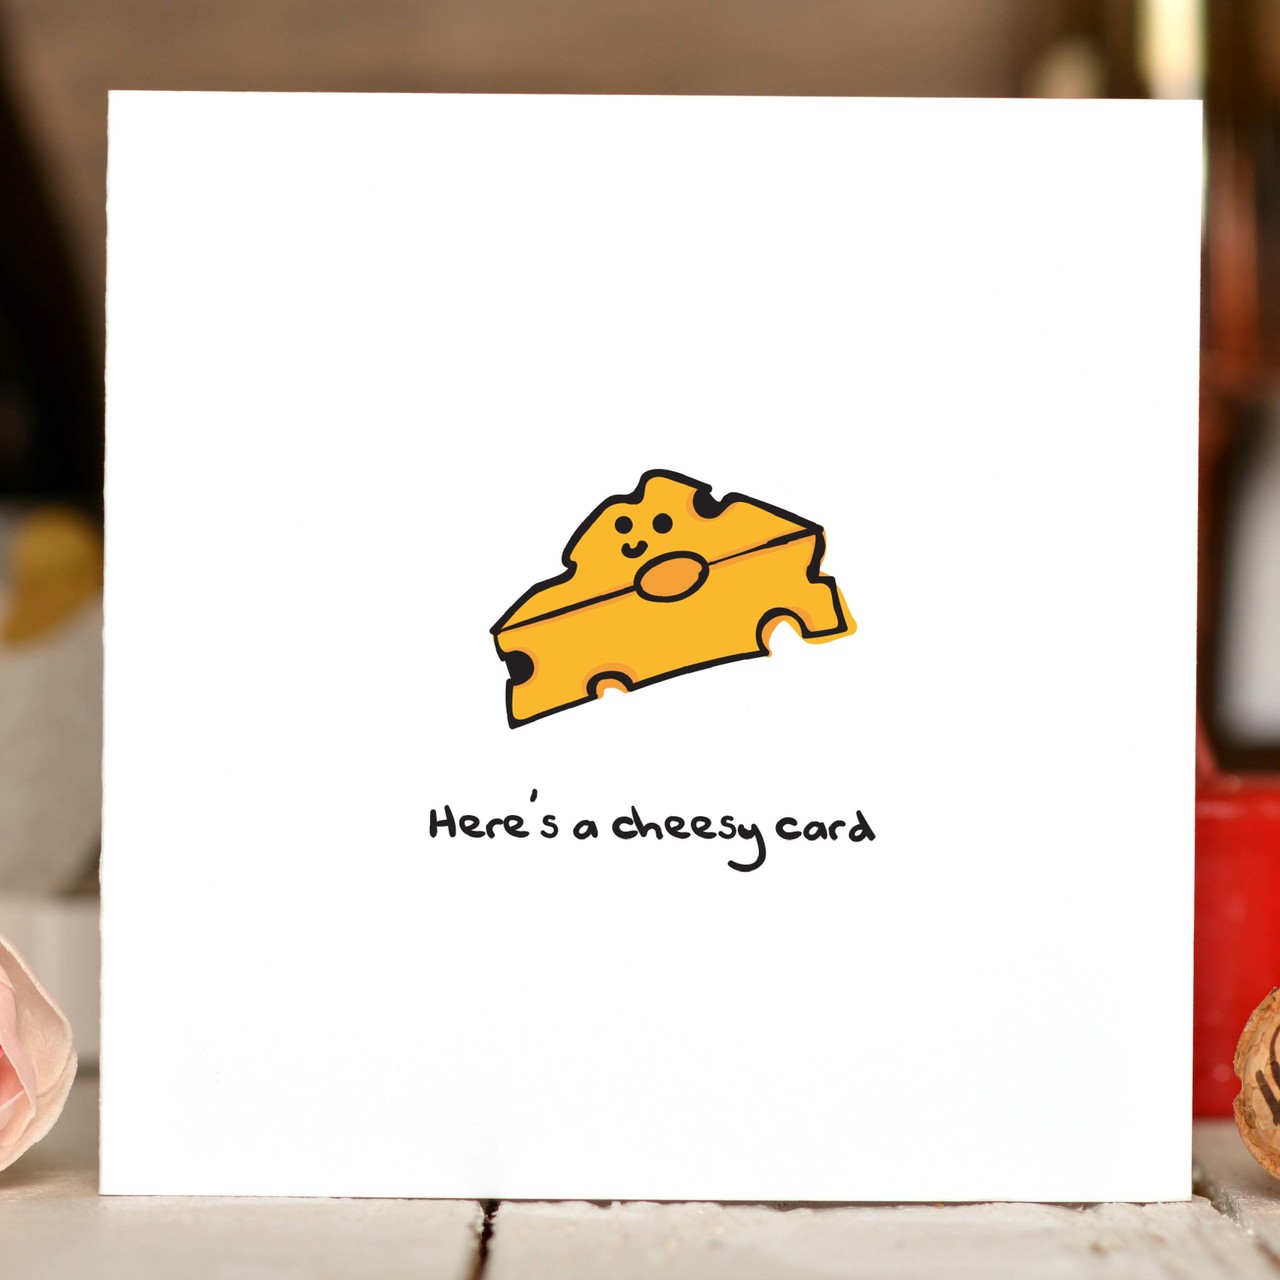 Here’s a cheesy card Card